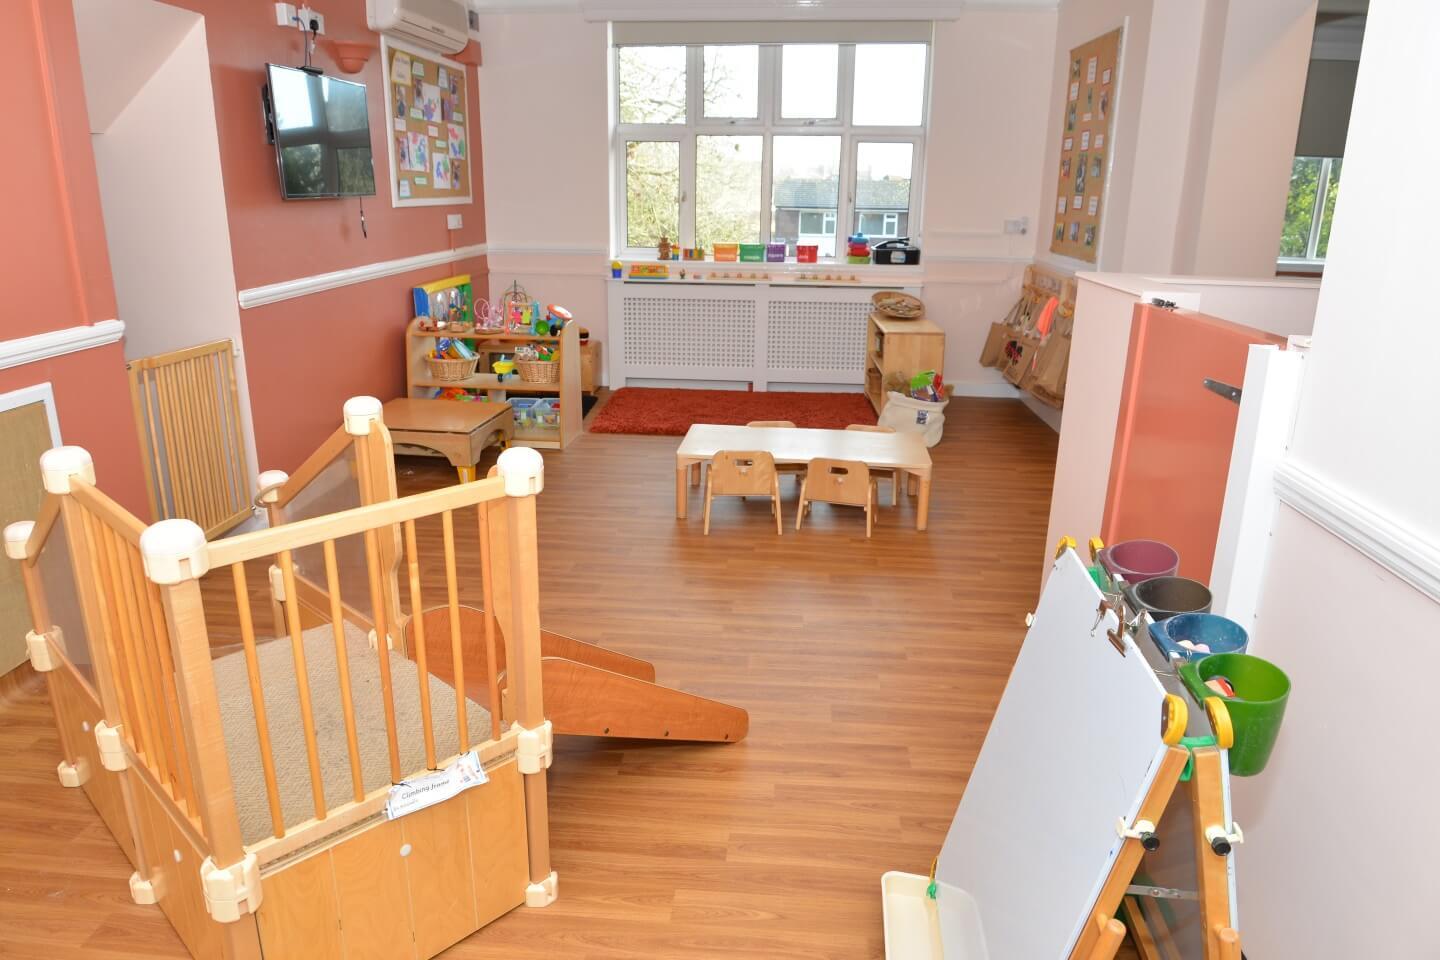 Asquith Surbiton Day Nursery and Preschool